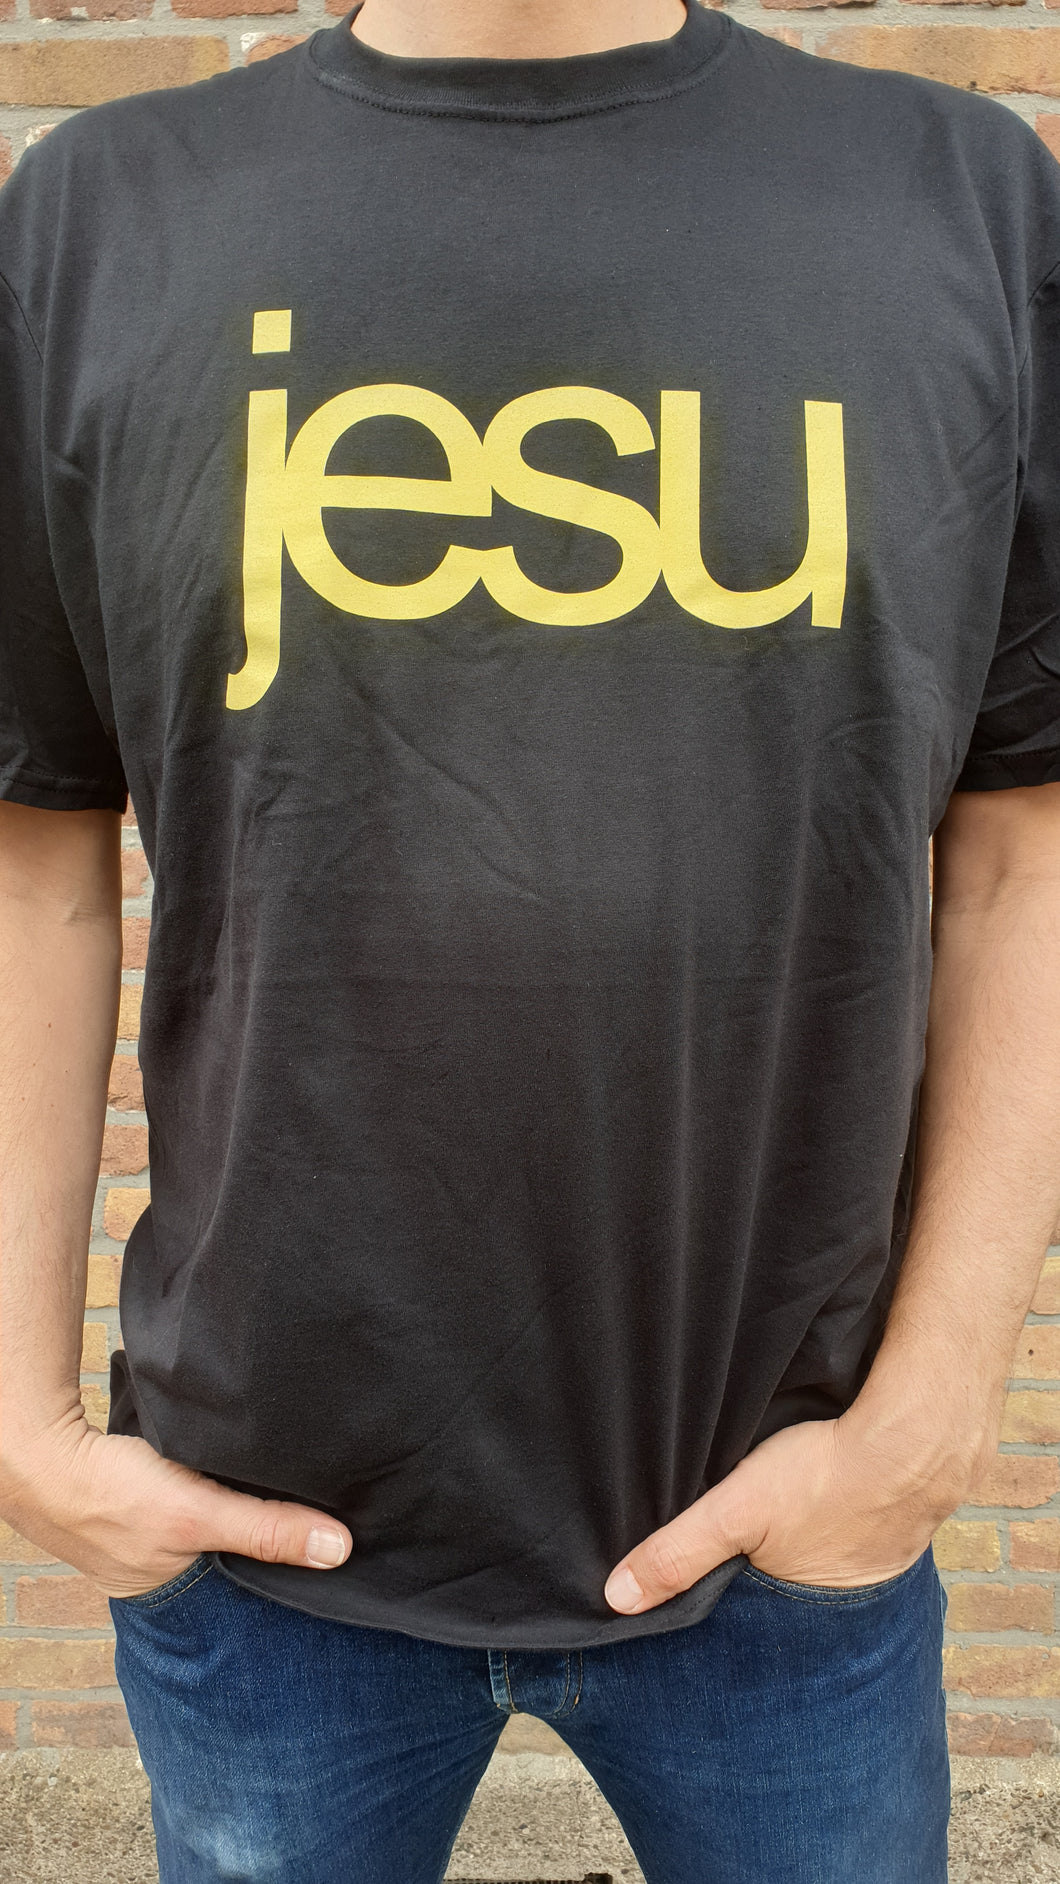 Jesu logo T-shirt M / L / XL yellow / gold